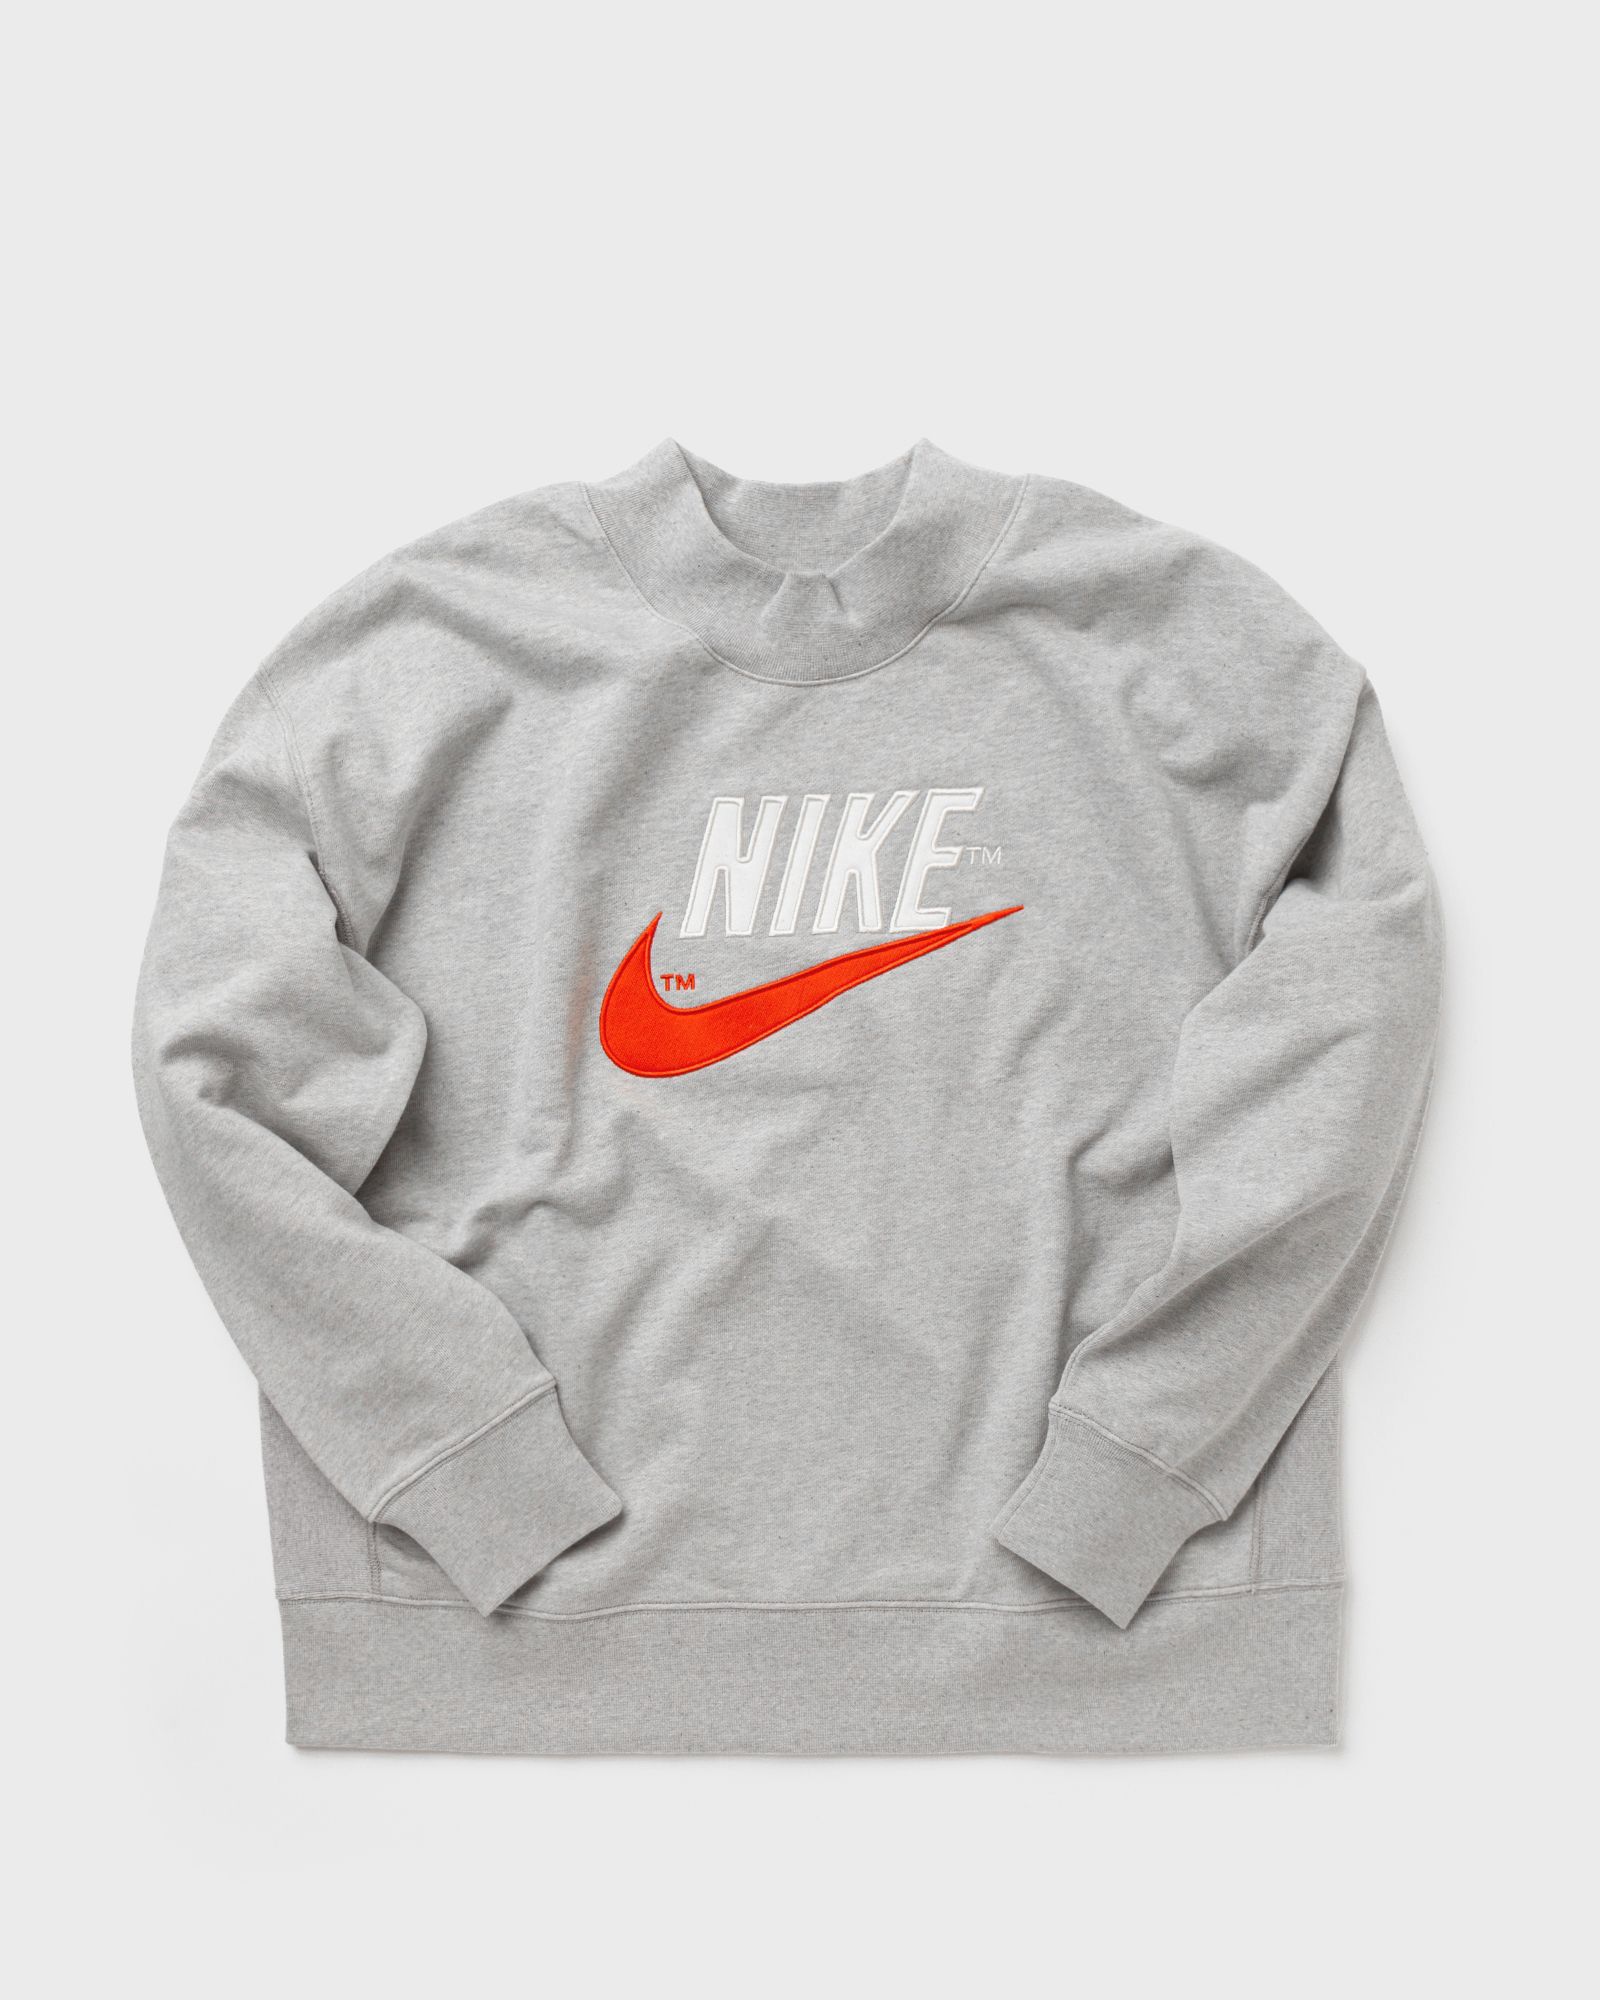 Nike - trend over shirt men sweatshirts grey in größe:l